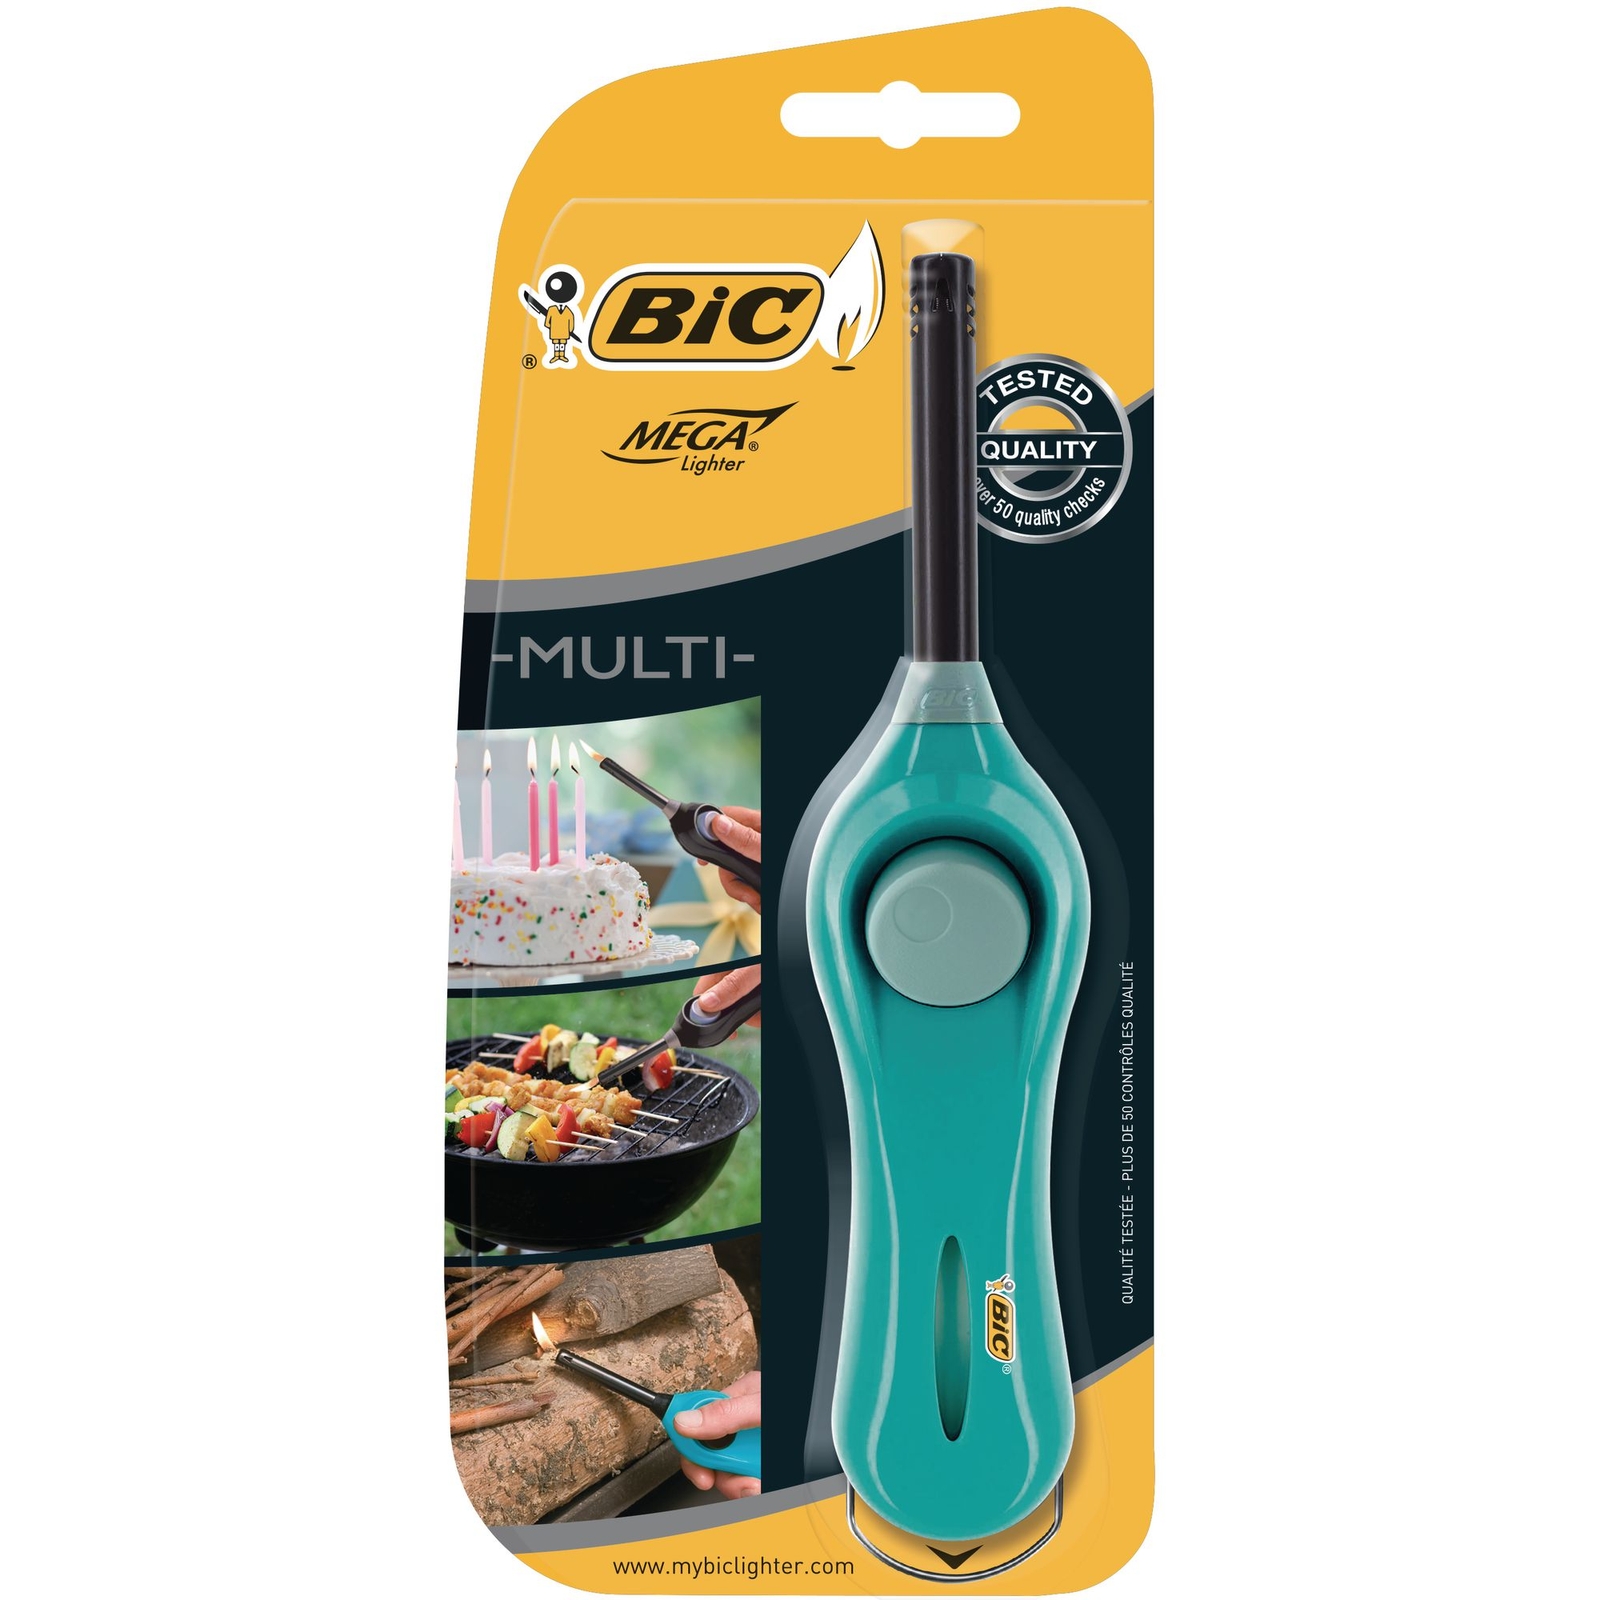 BIC Mega Lighter - Each